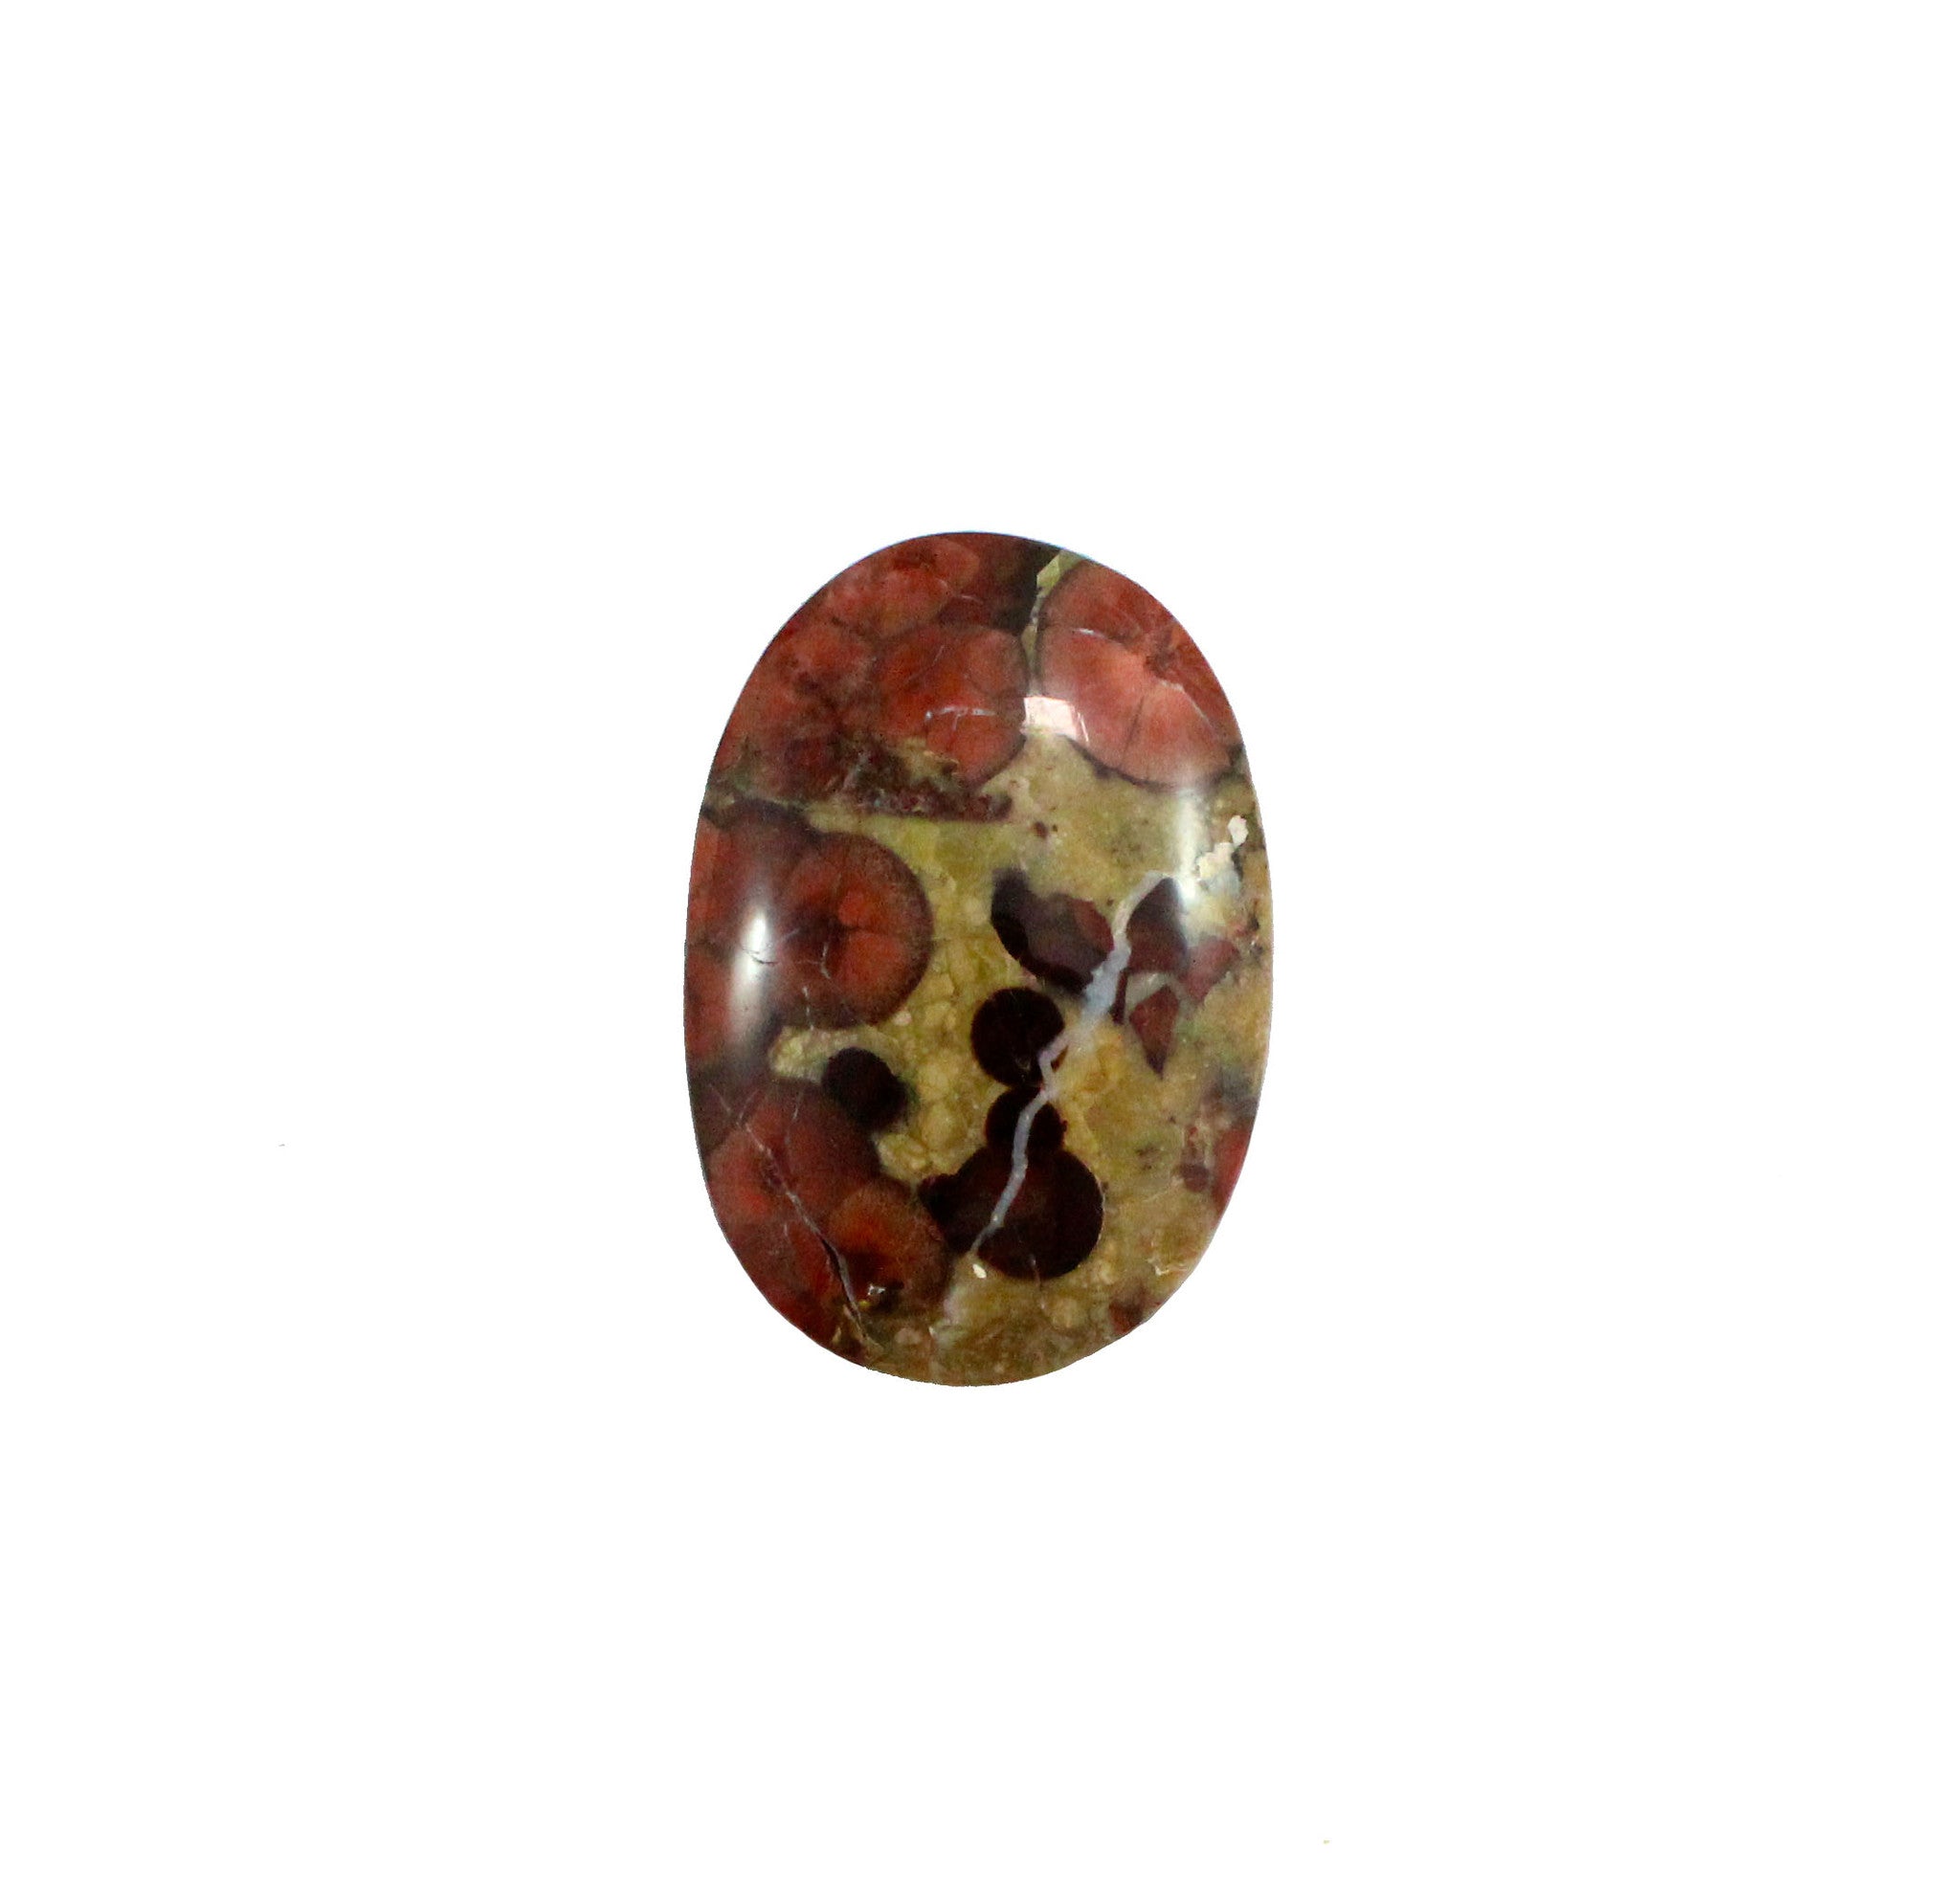 Peanut Rock 36x25mm oval cut cabochon - Make your own custom jewelry - Sarah Hughes - 7